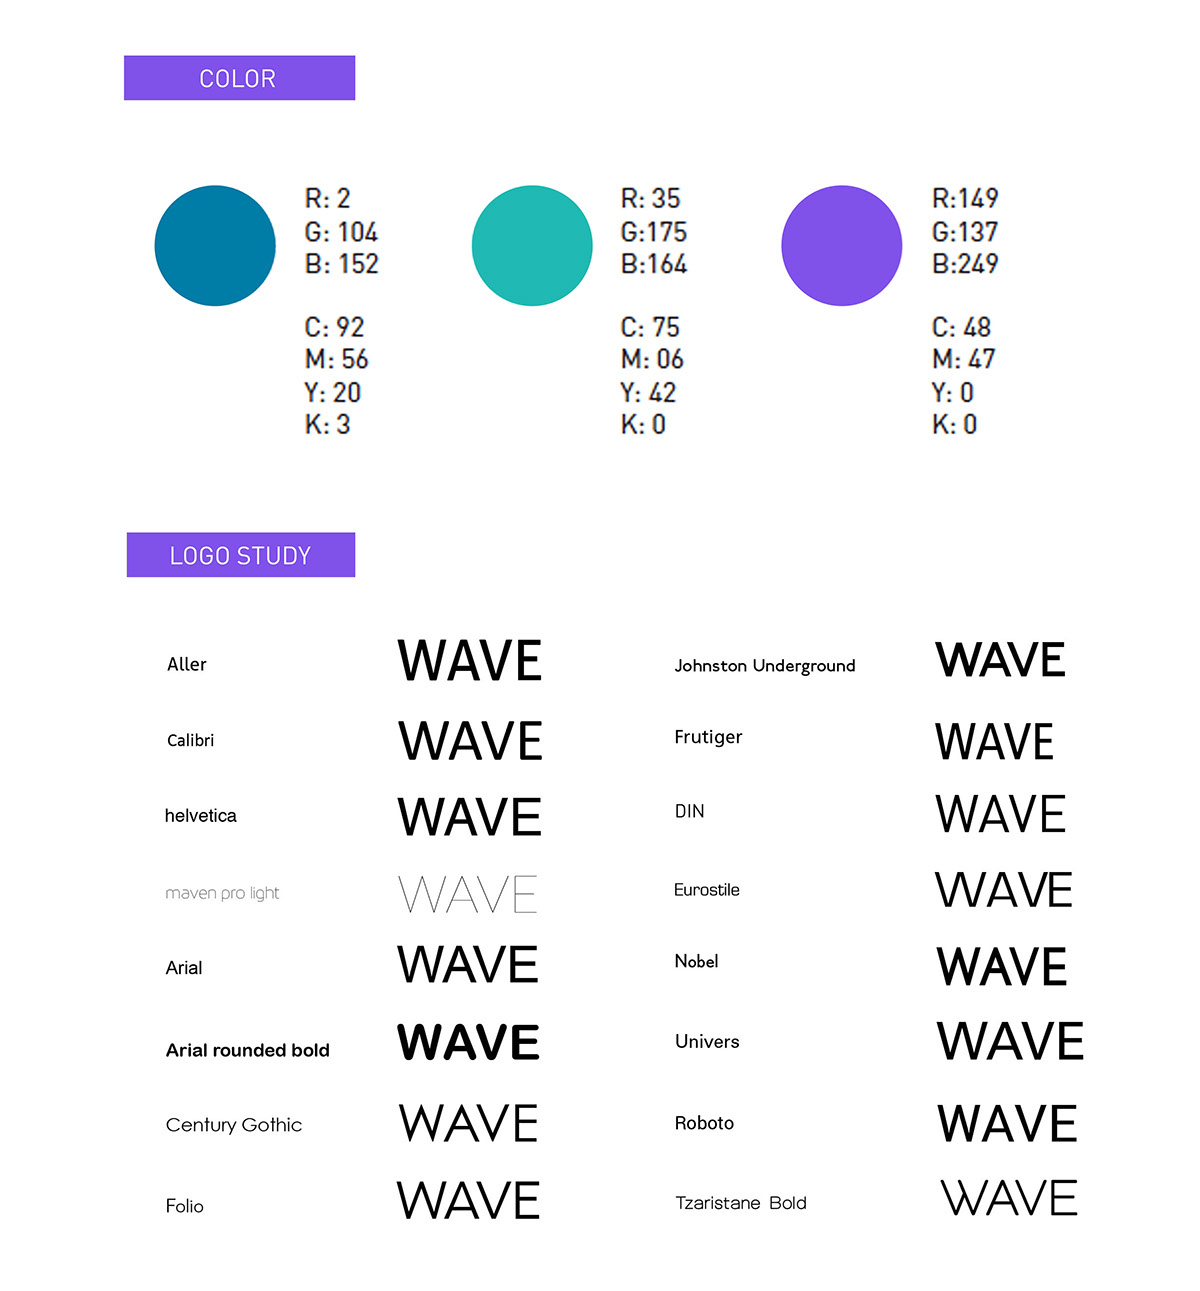 wave Radio music app line movement digital design Interface interactive